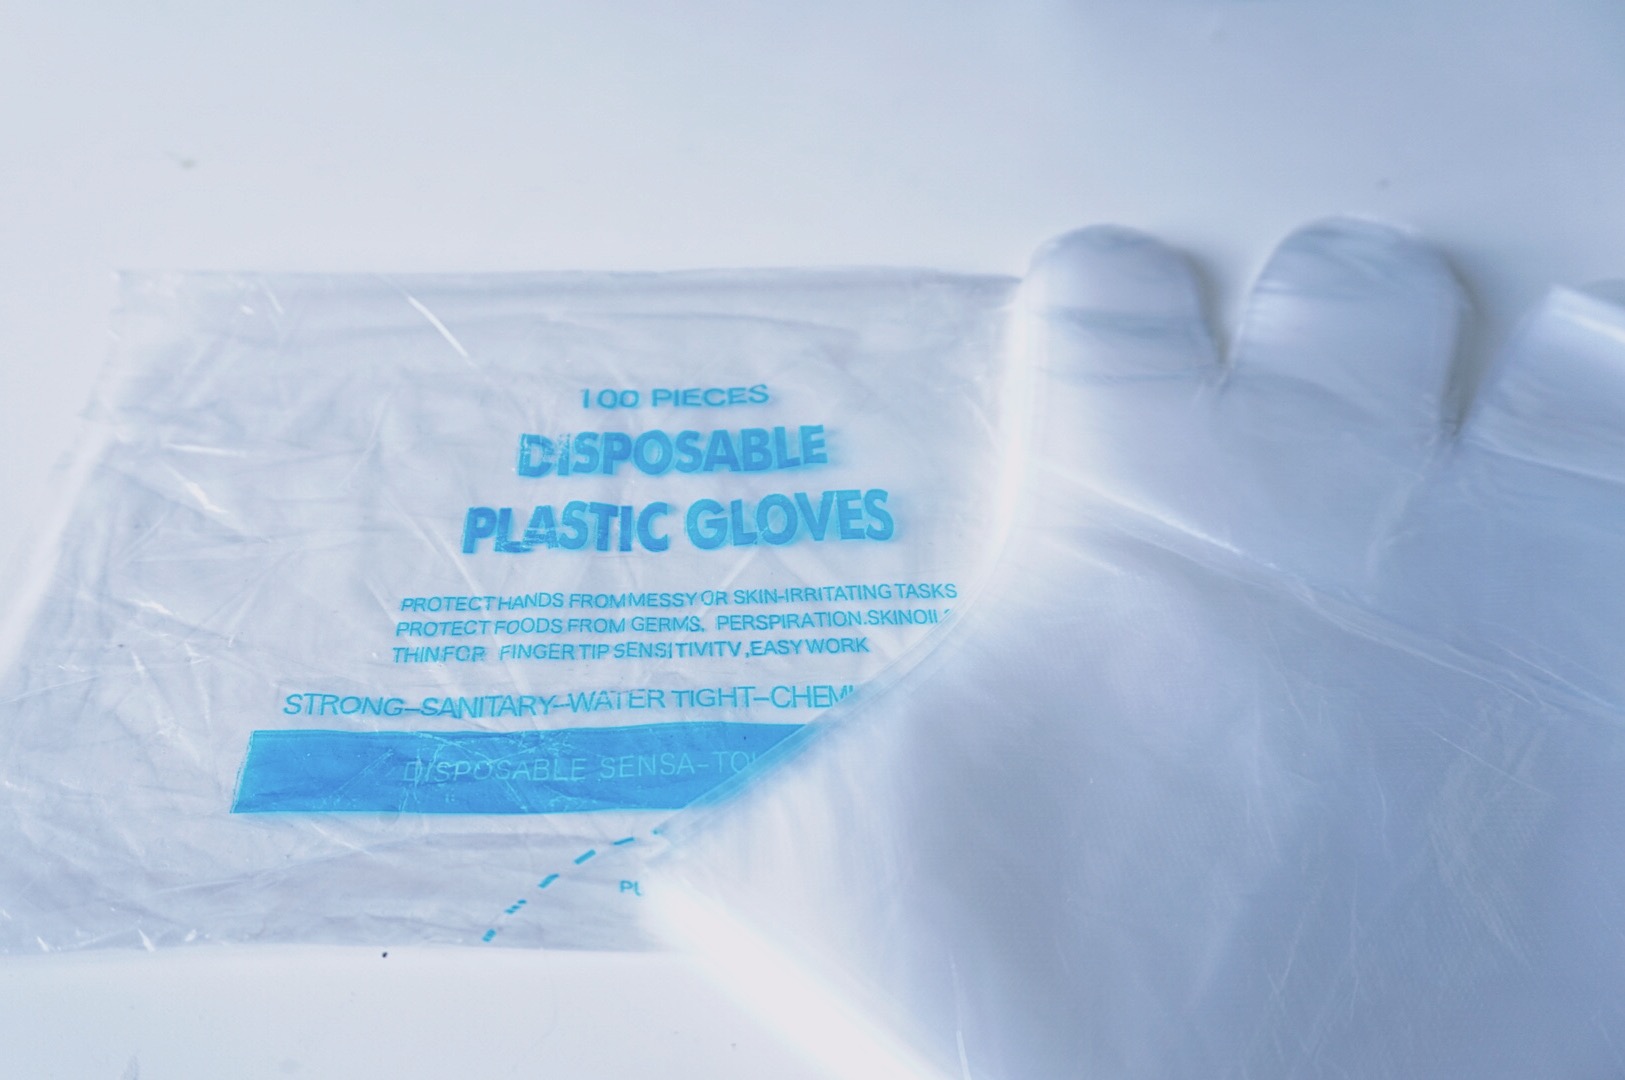 Disposable gloves foil gloves 100 pcs pack